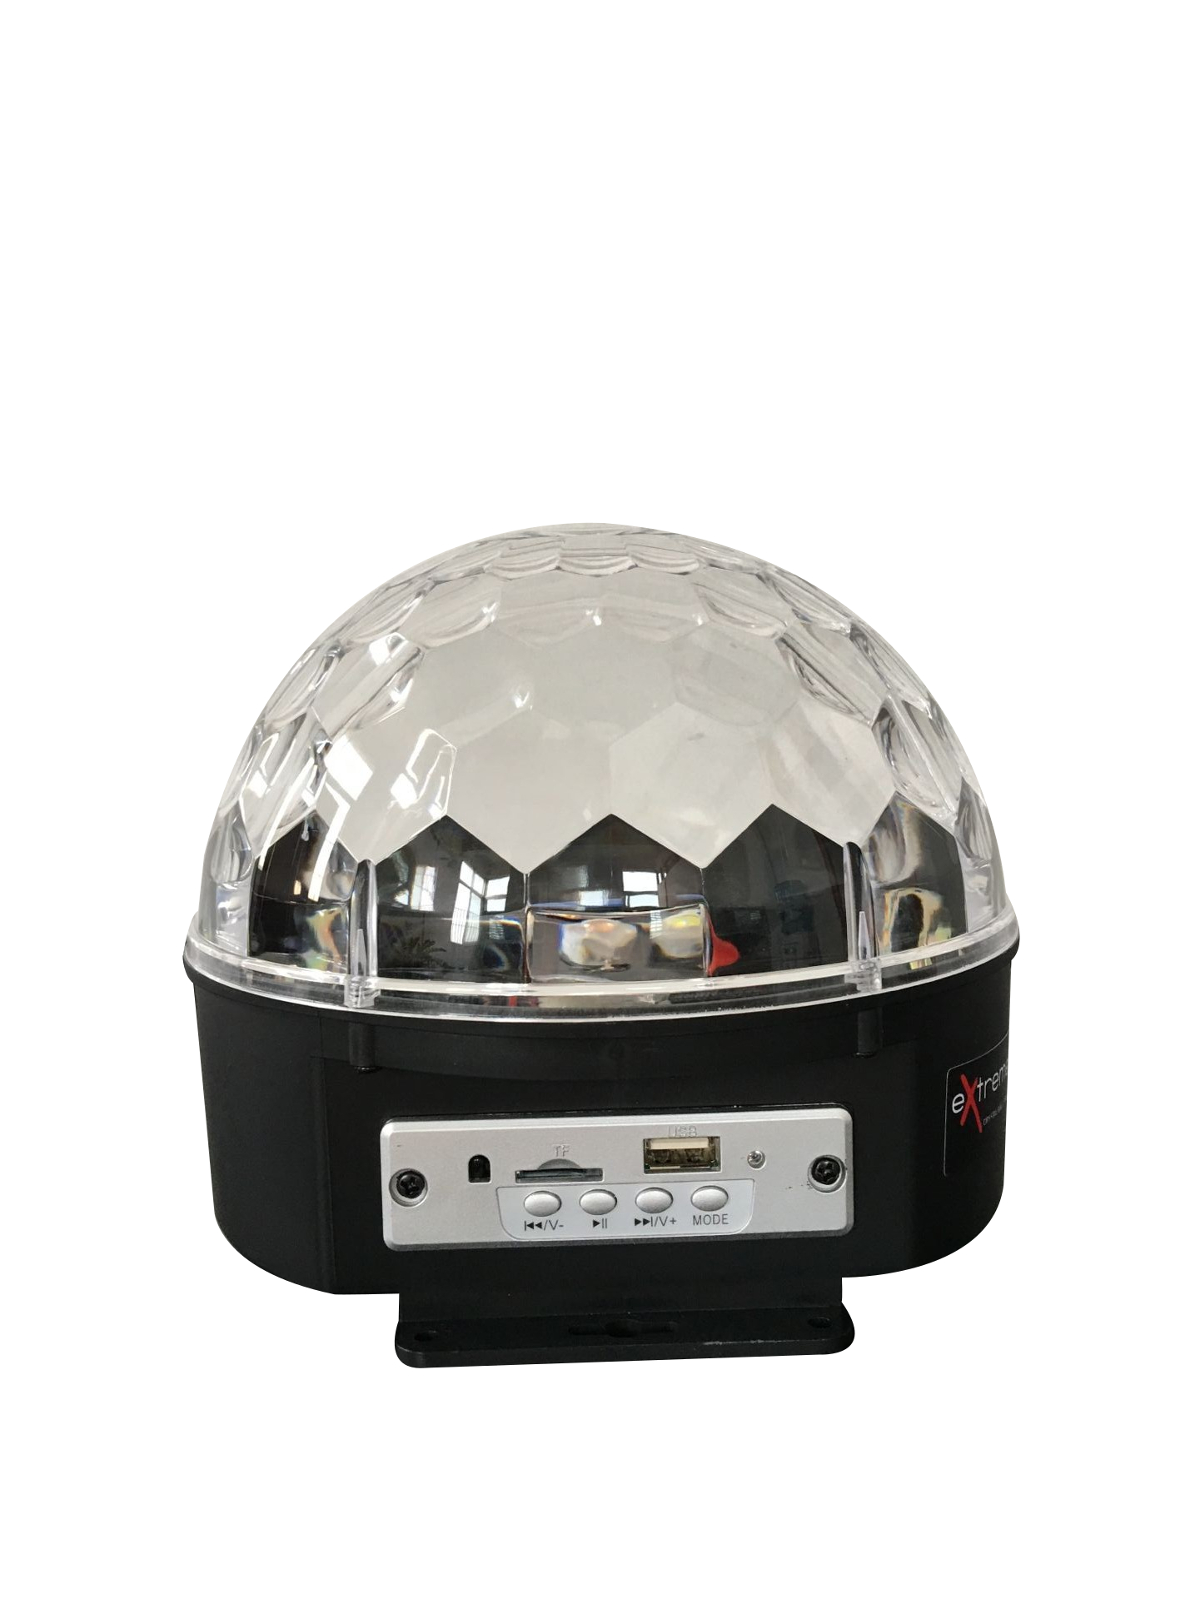 EXTREME CRYSTAL BALL 91-MP3 EFFETTO LUCE LED MAGIC 9x1W RGBYWVOPwW MEZZA SFERA BLUETOOTH MINI-SD+USB TELECOMANDO REMOTE AUTO SOUND ACTIVE_3